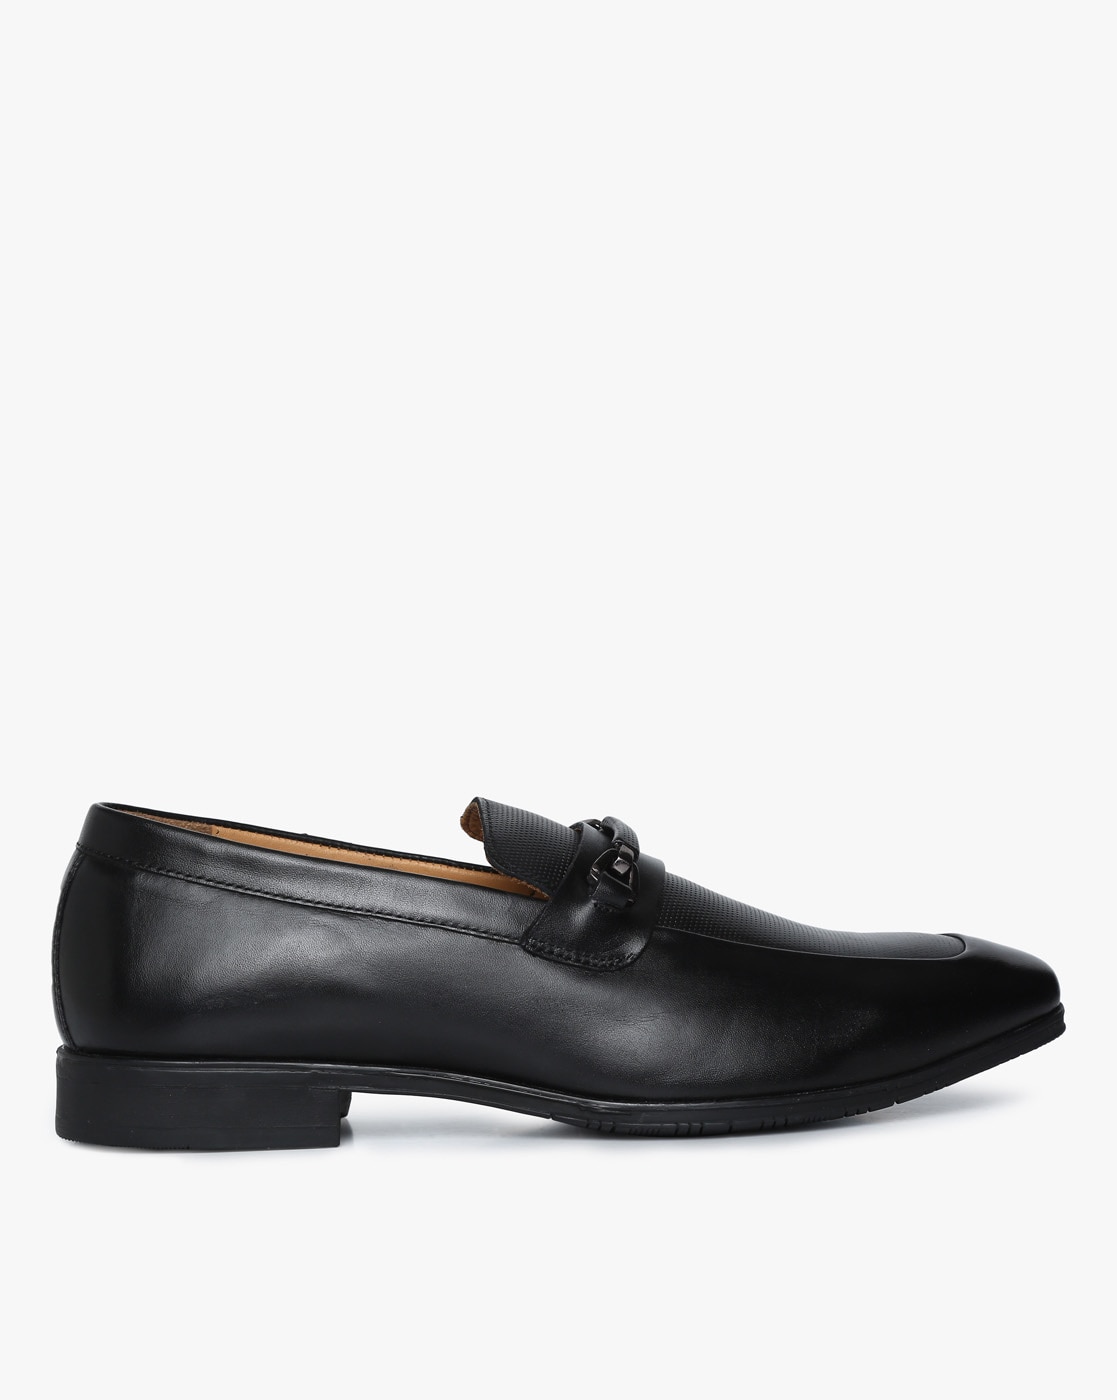 louis philippe black formal shoes